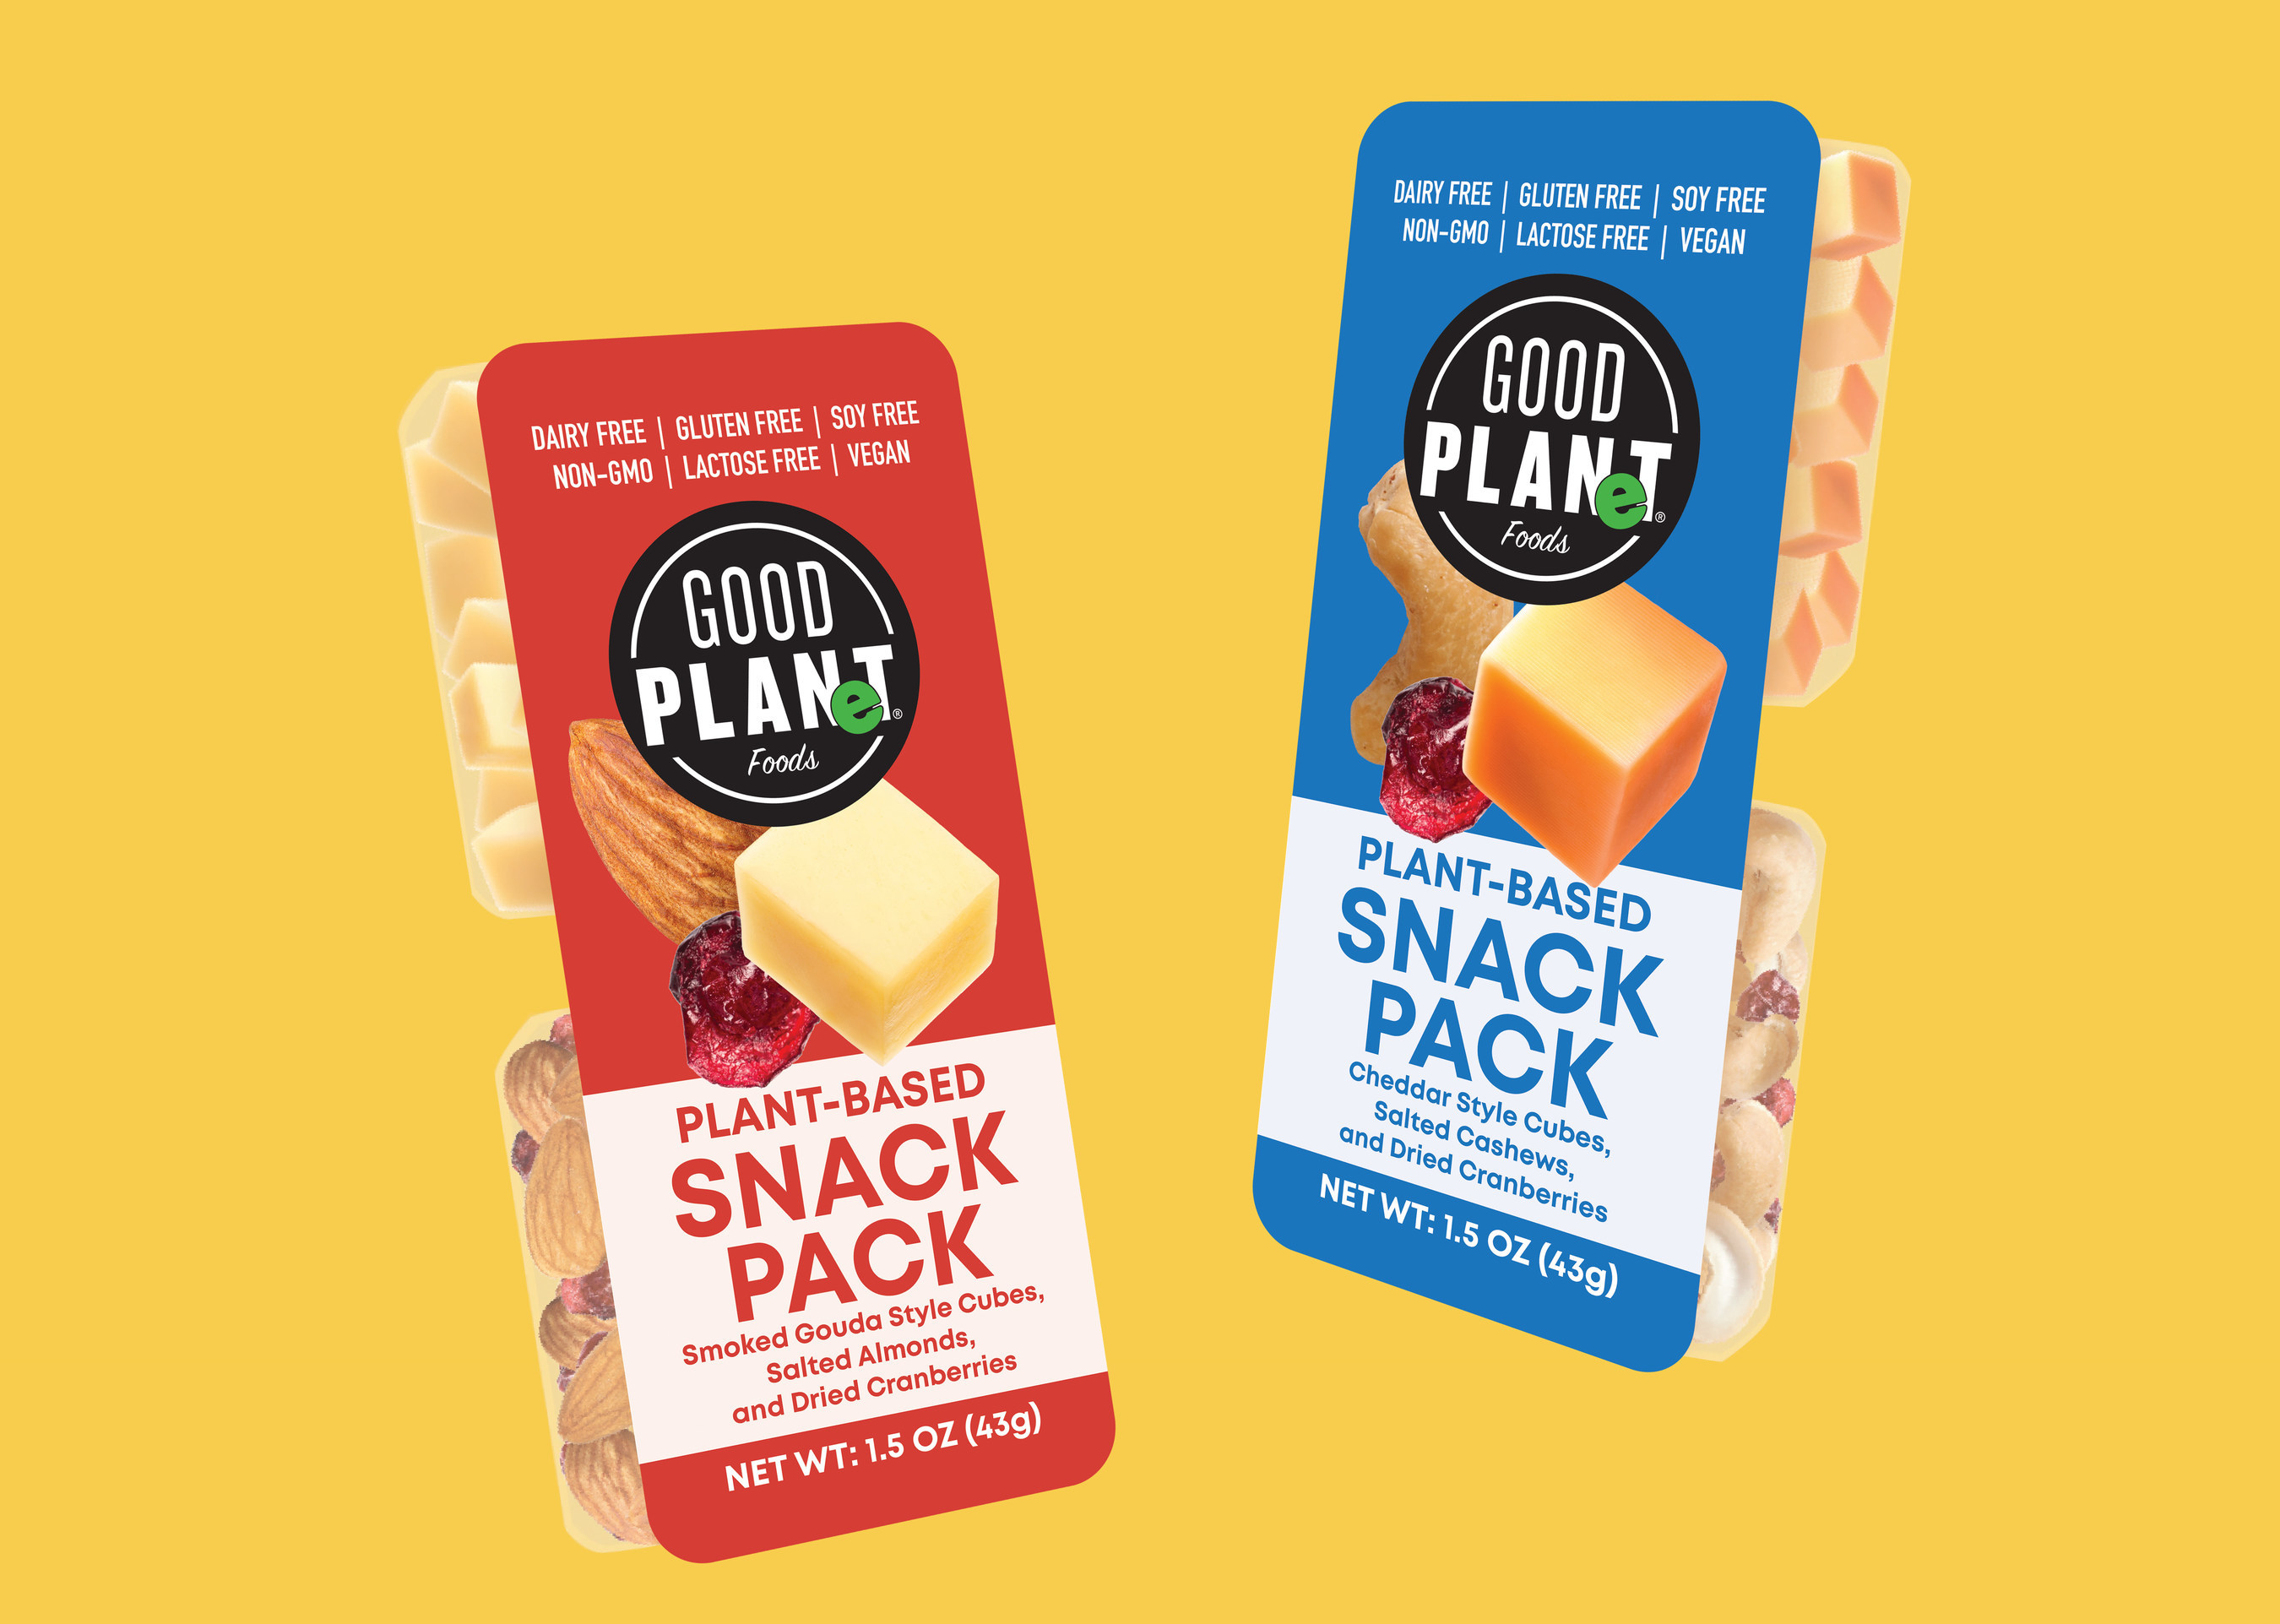     GOOD PLANeT Foods Snack-Packs